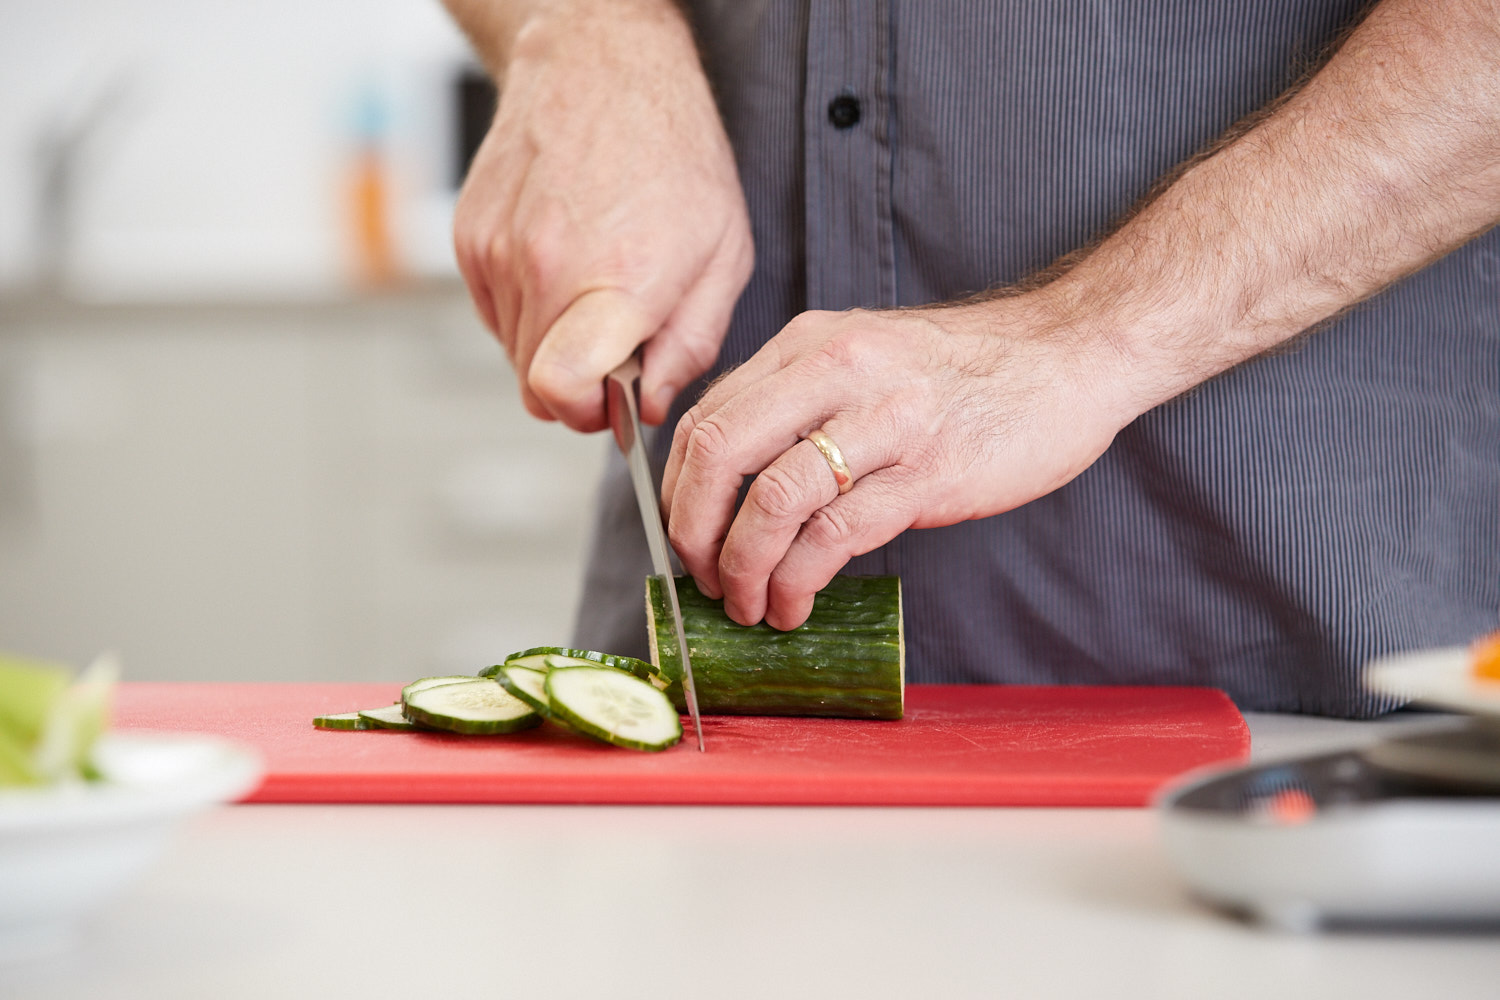 "A man cuts a cucumber on a red chopping board"